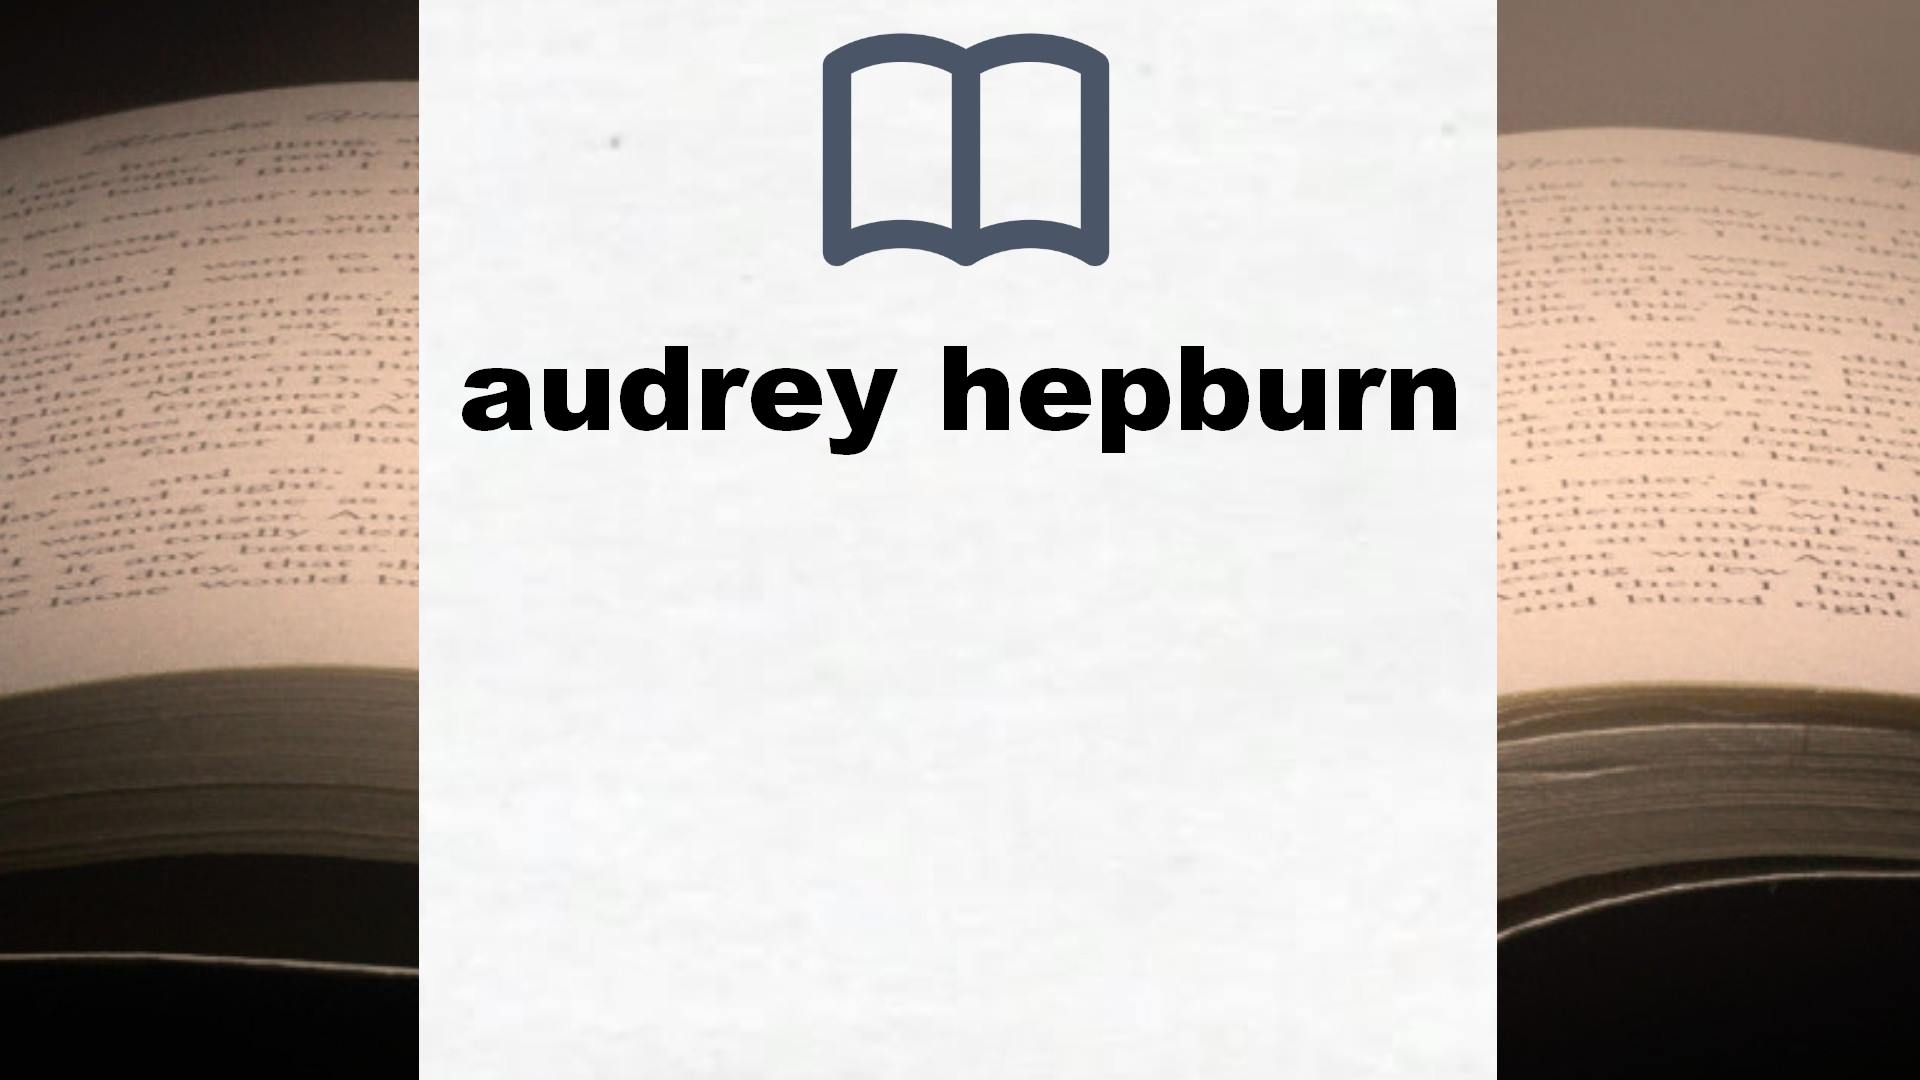 Libros sobre audrey hepburn